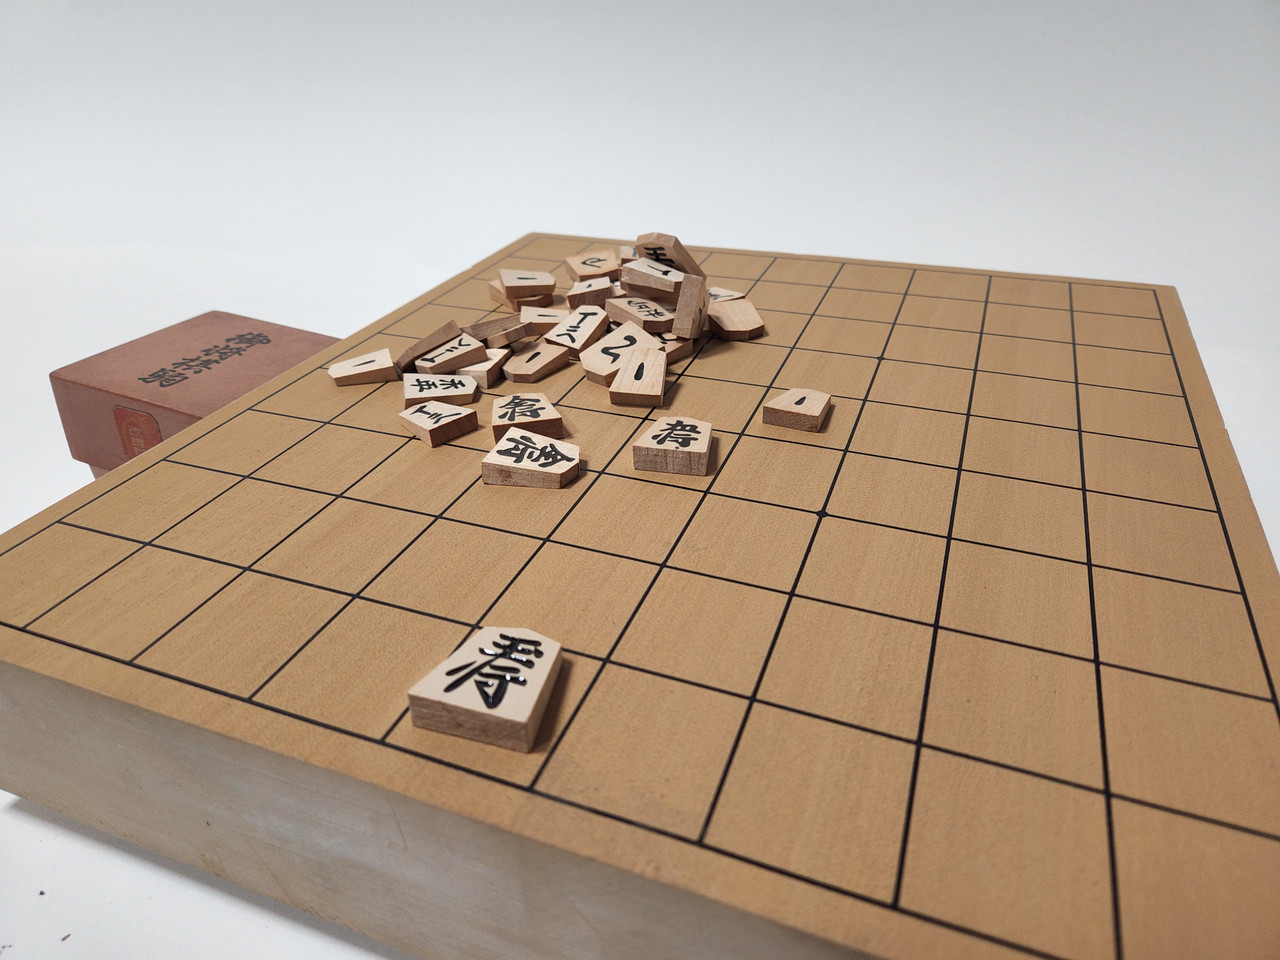 Board Game, Game Set, Shogi